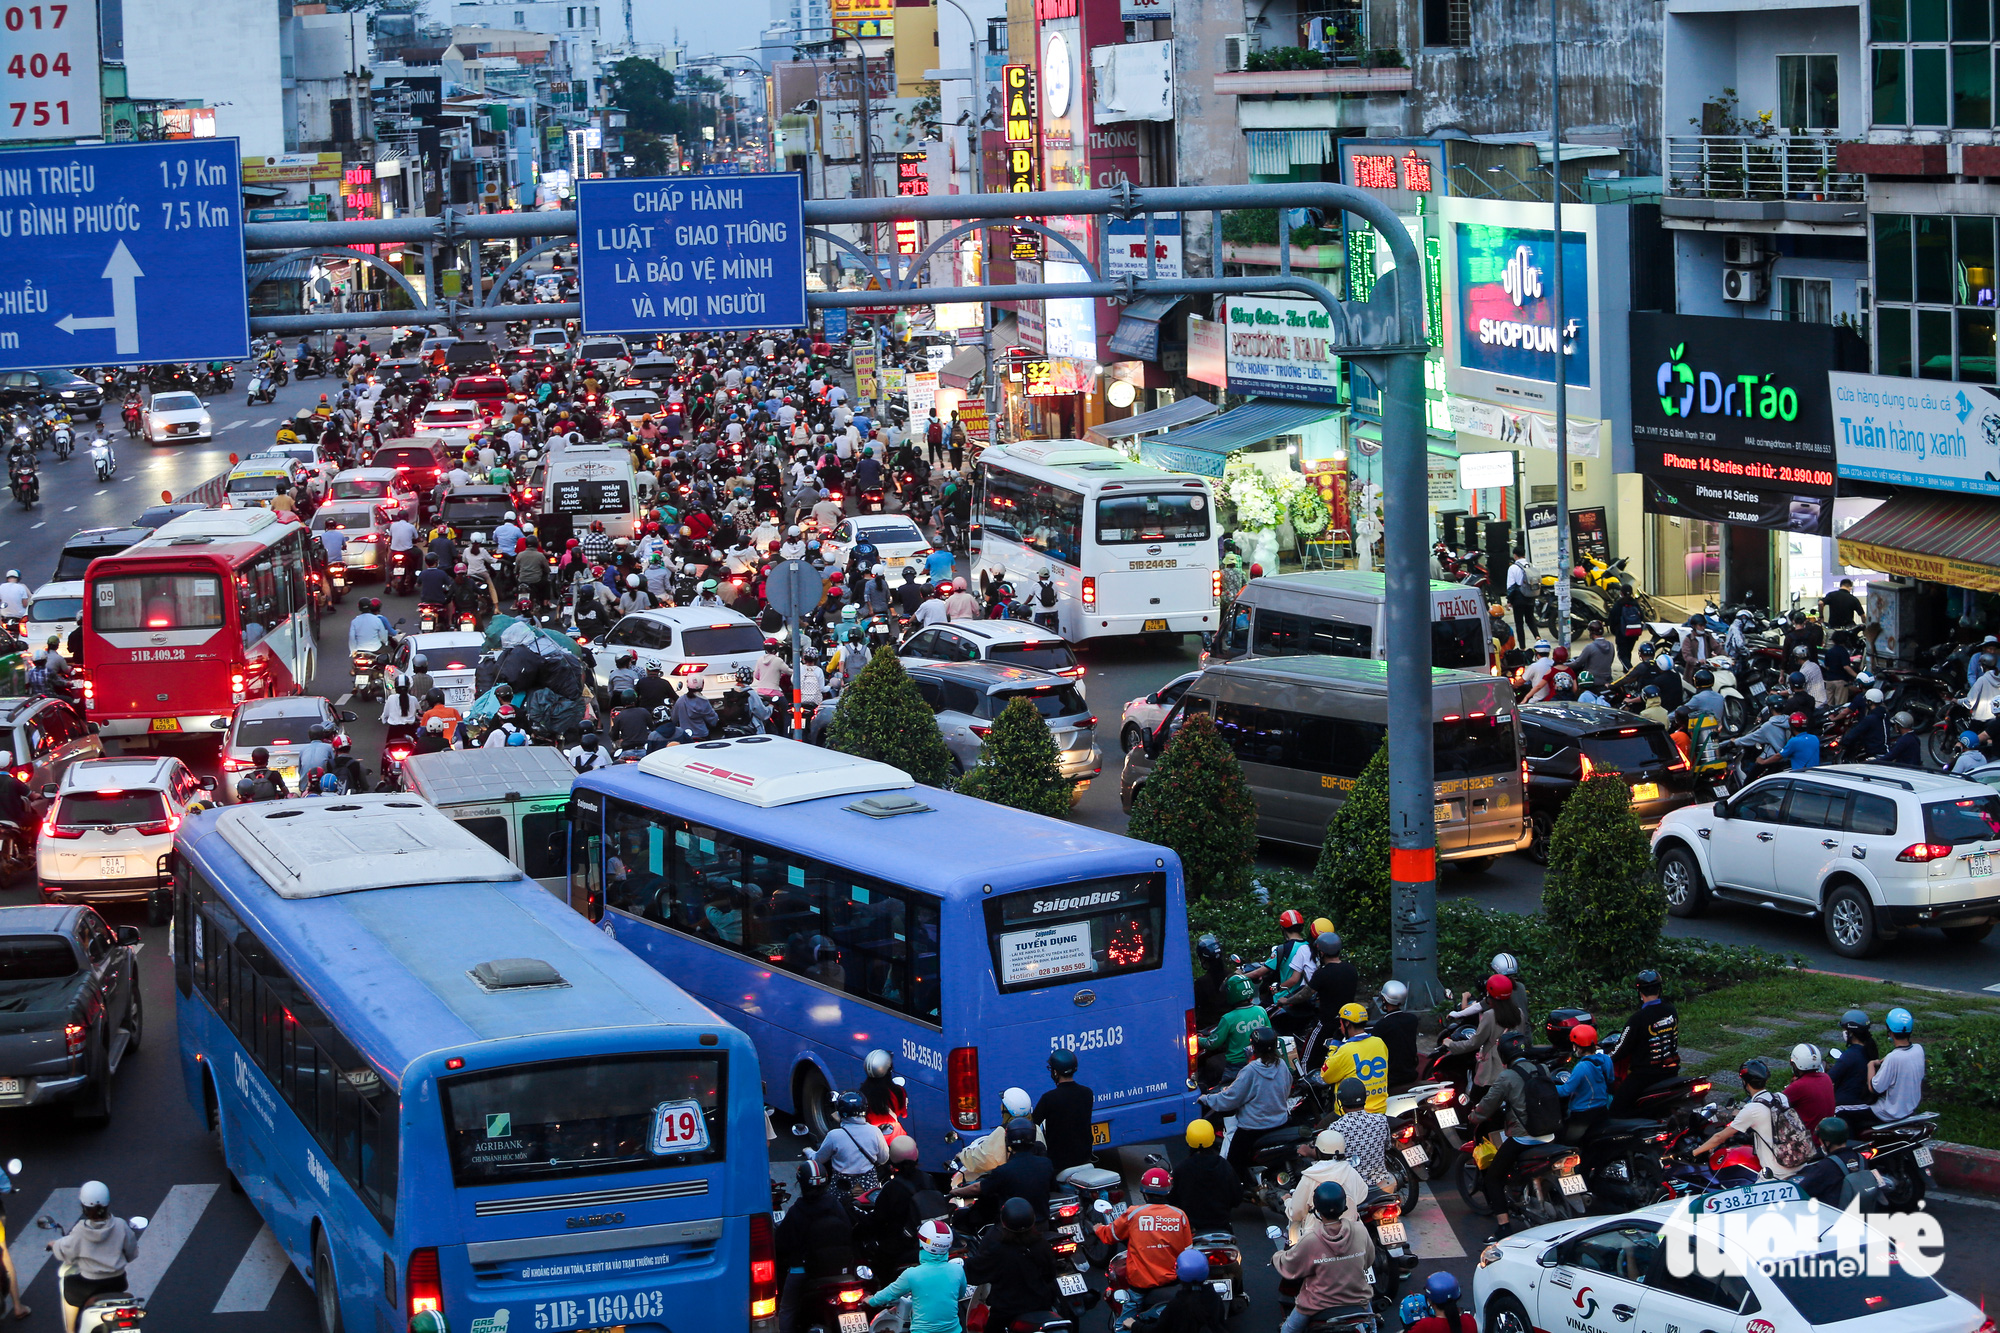 Ho Chi Minh City records 6 new congestion hotspots in 2022